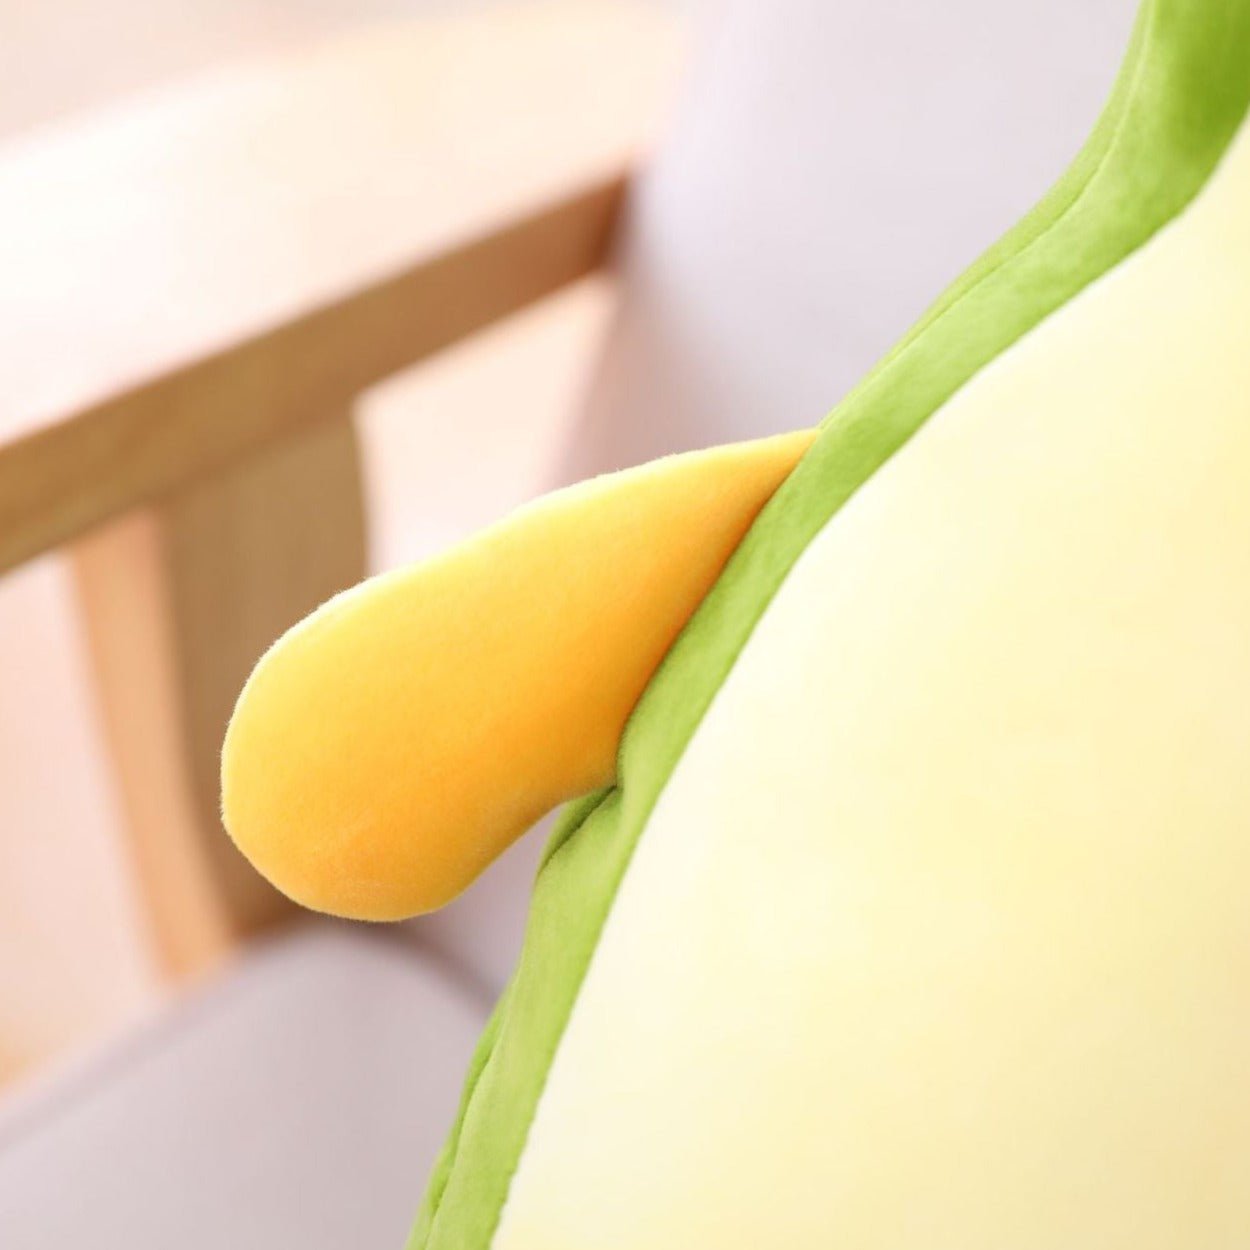 Cute Green Avocado Plush Toys Body Pillows - TOY-PLU-43901 - yangzhouyile - 42shops